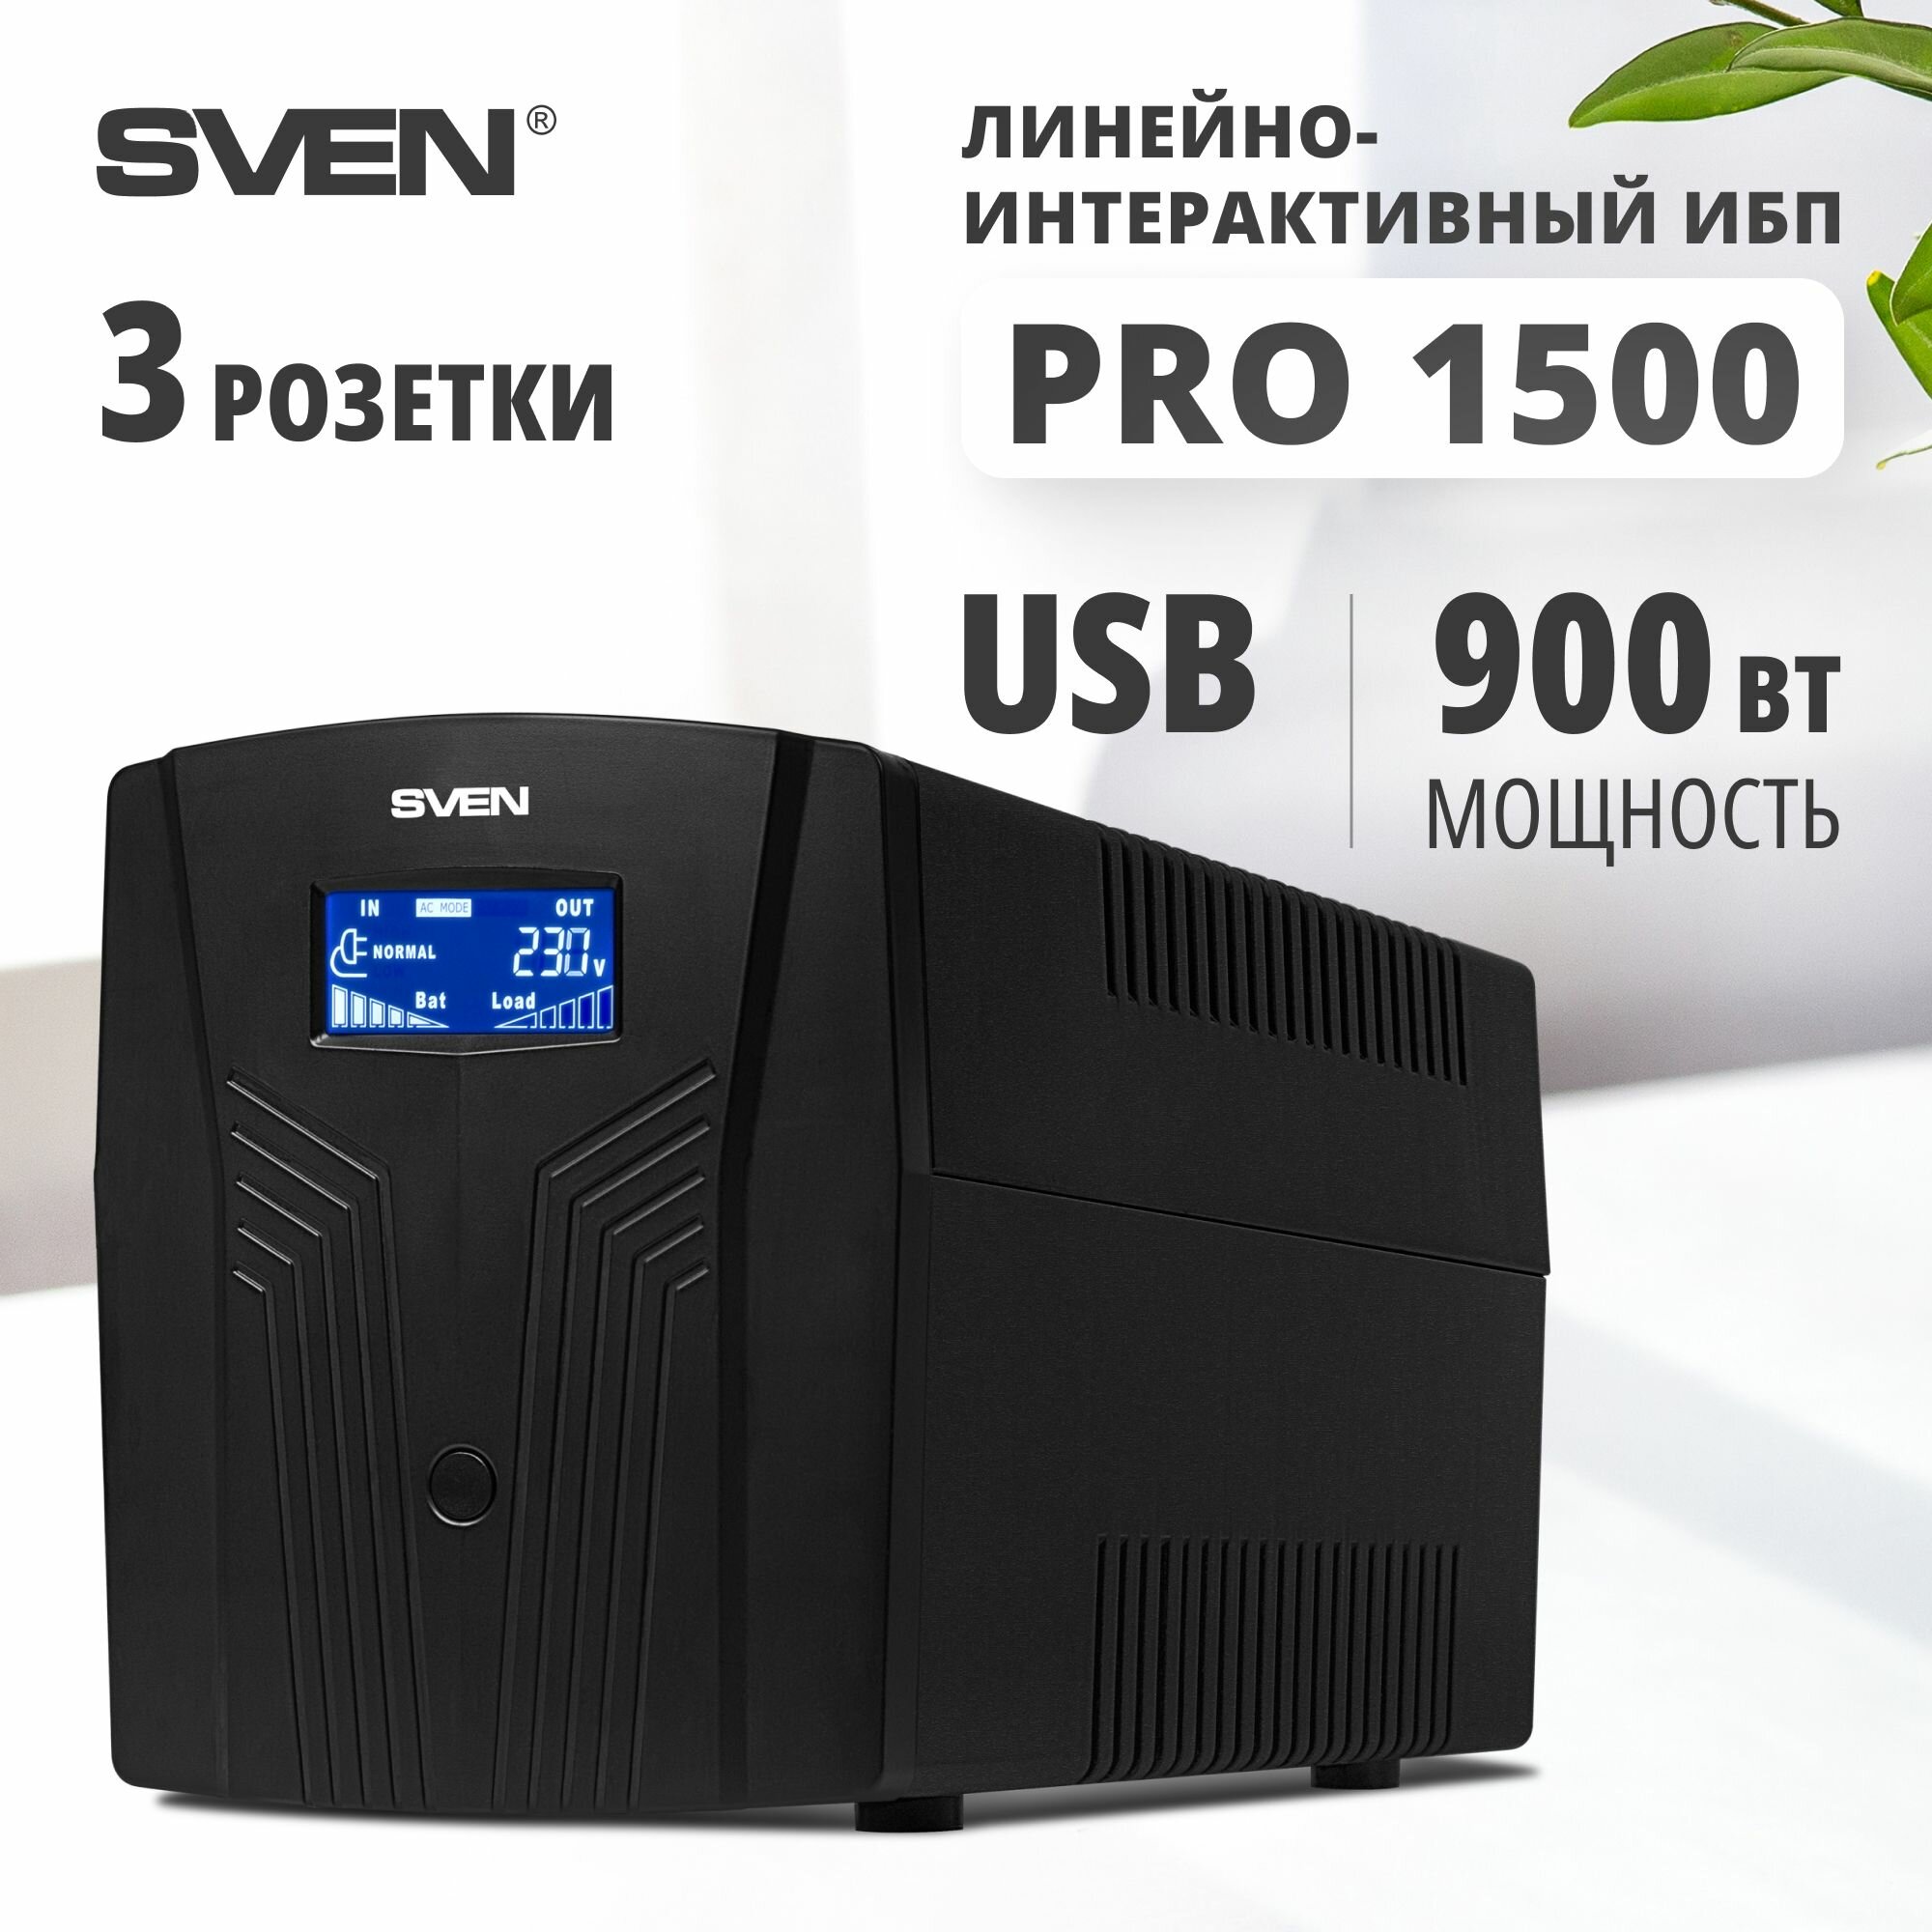 Интерактивный ИБП SVEN Pro 1500 (LCD USB)